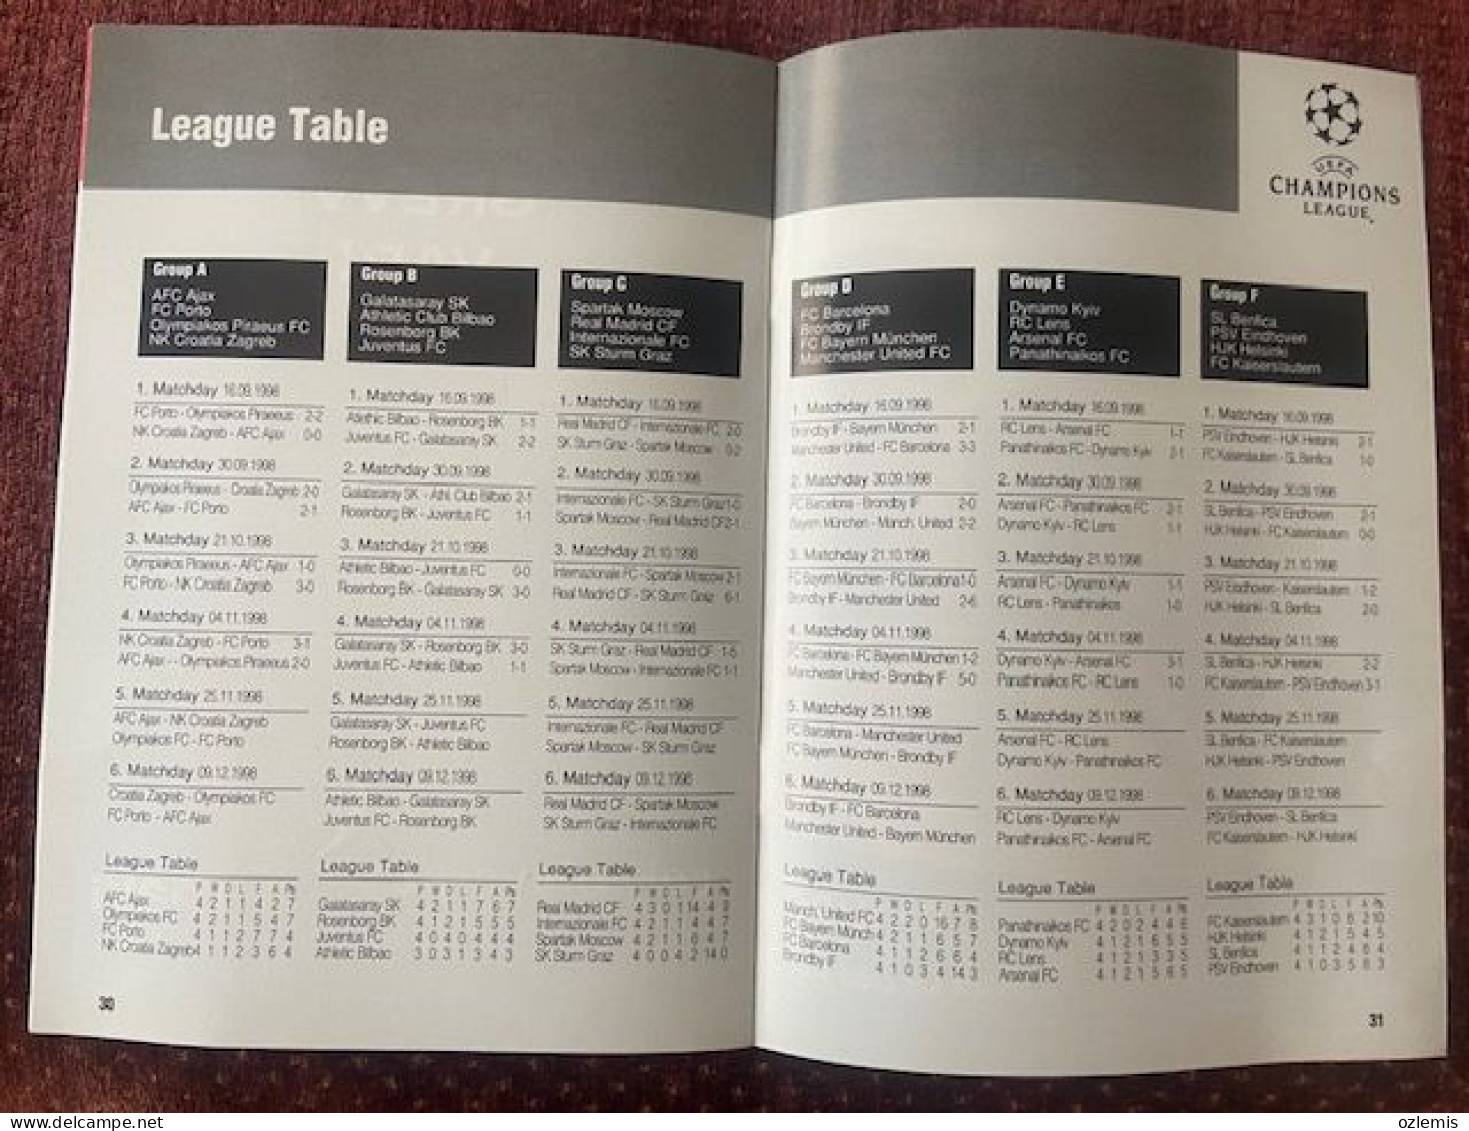 GALATASARAY - JUVENTUS FC  ,UEFA CHAMPIONS LEAGUE ,MATCH SCHEDULE ,1998 - Livres